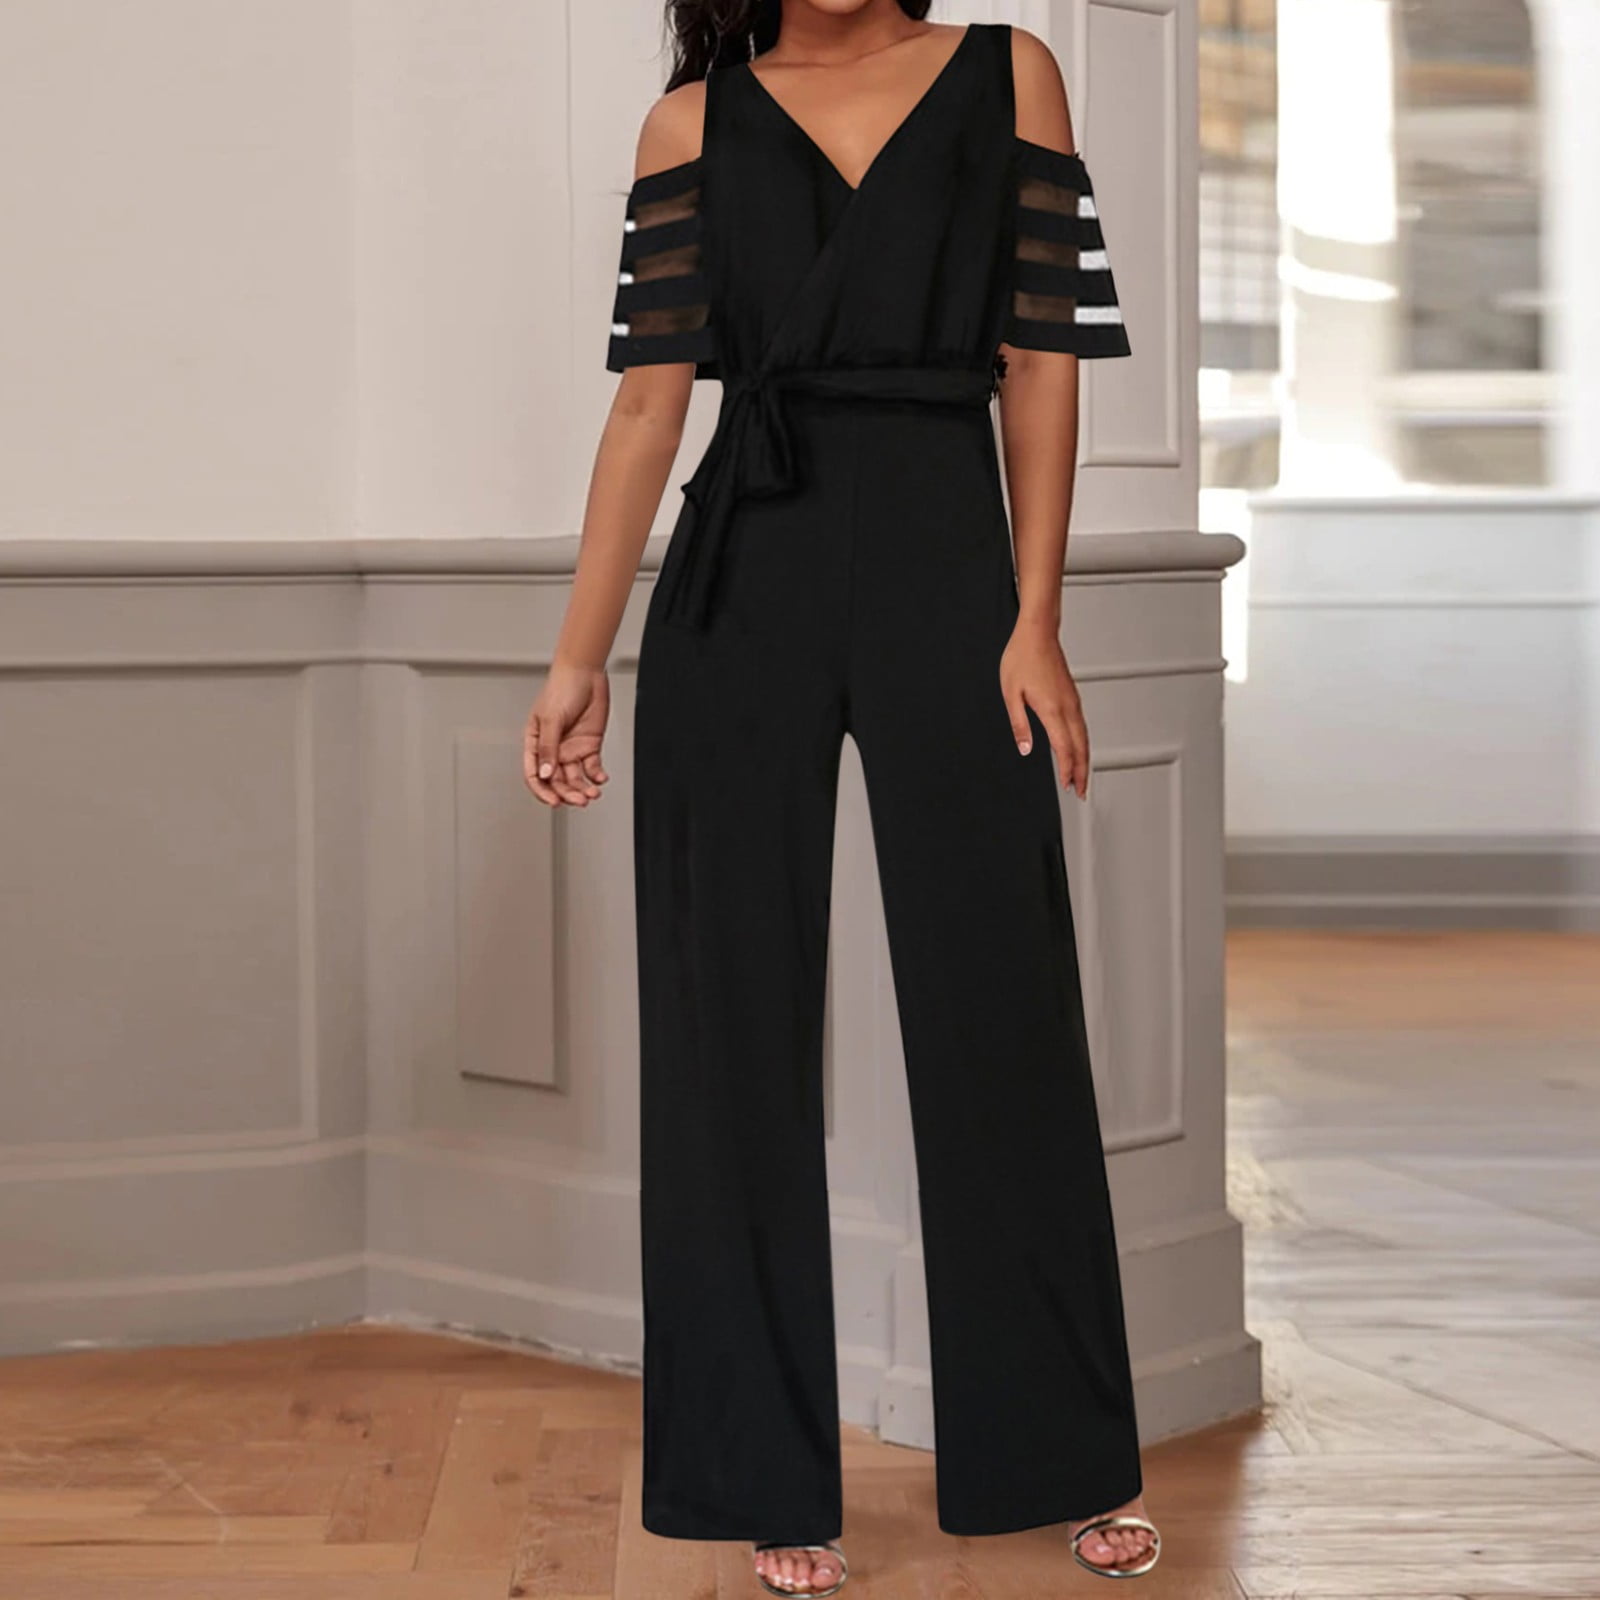 PENXZT Womens Black Dress Plunging Neck Crisscross Back Tie Front Jumpsuit  (Size : M) : Buy Online at Best Price in KSA - Souq is now Amazon.sa:  Fashion